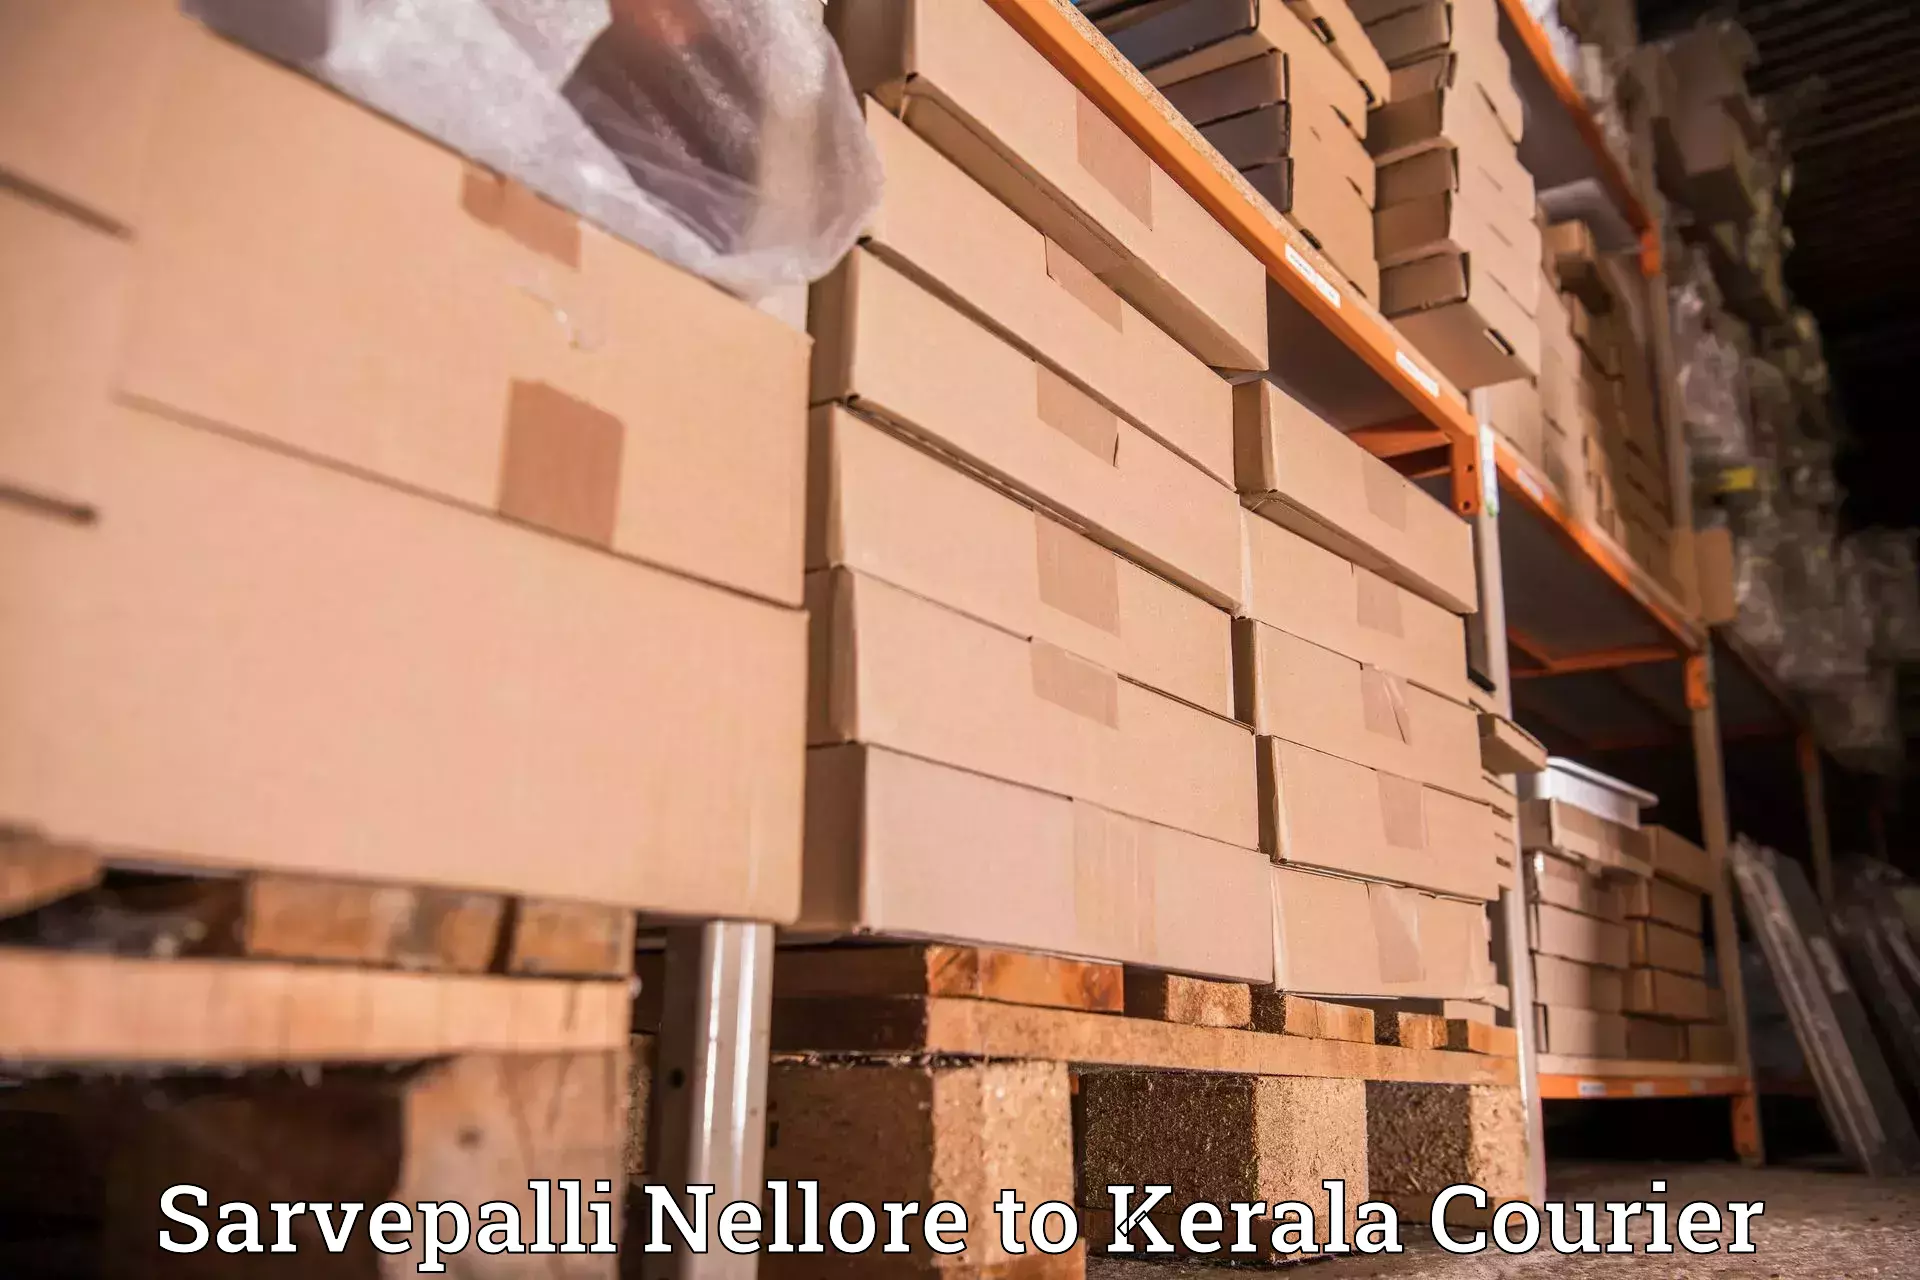 Courier service partnerships Sarvepalli Nellore to Perumbavoor